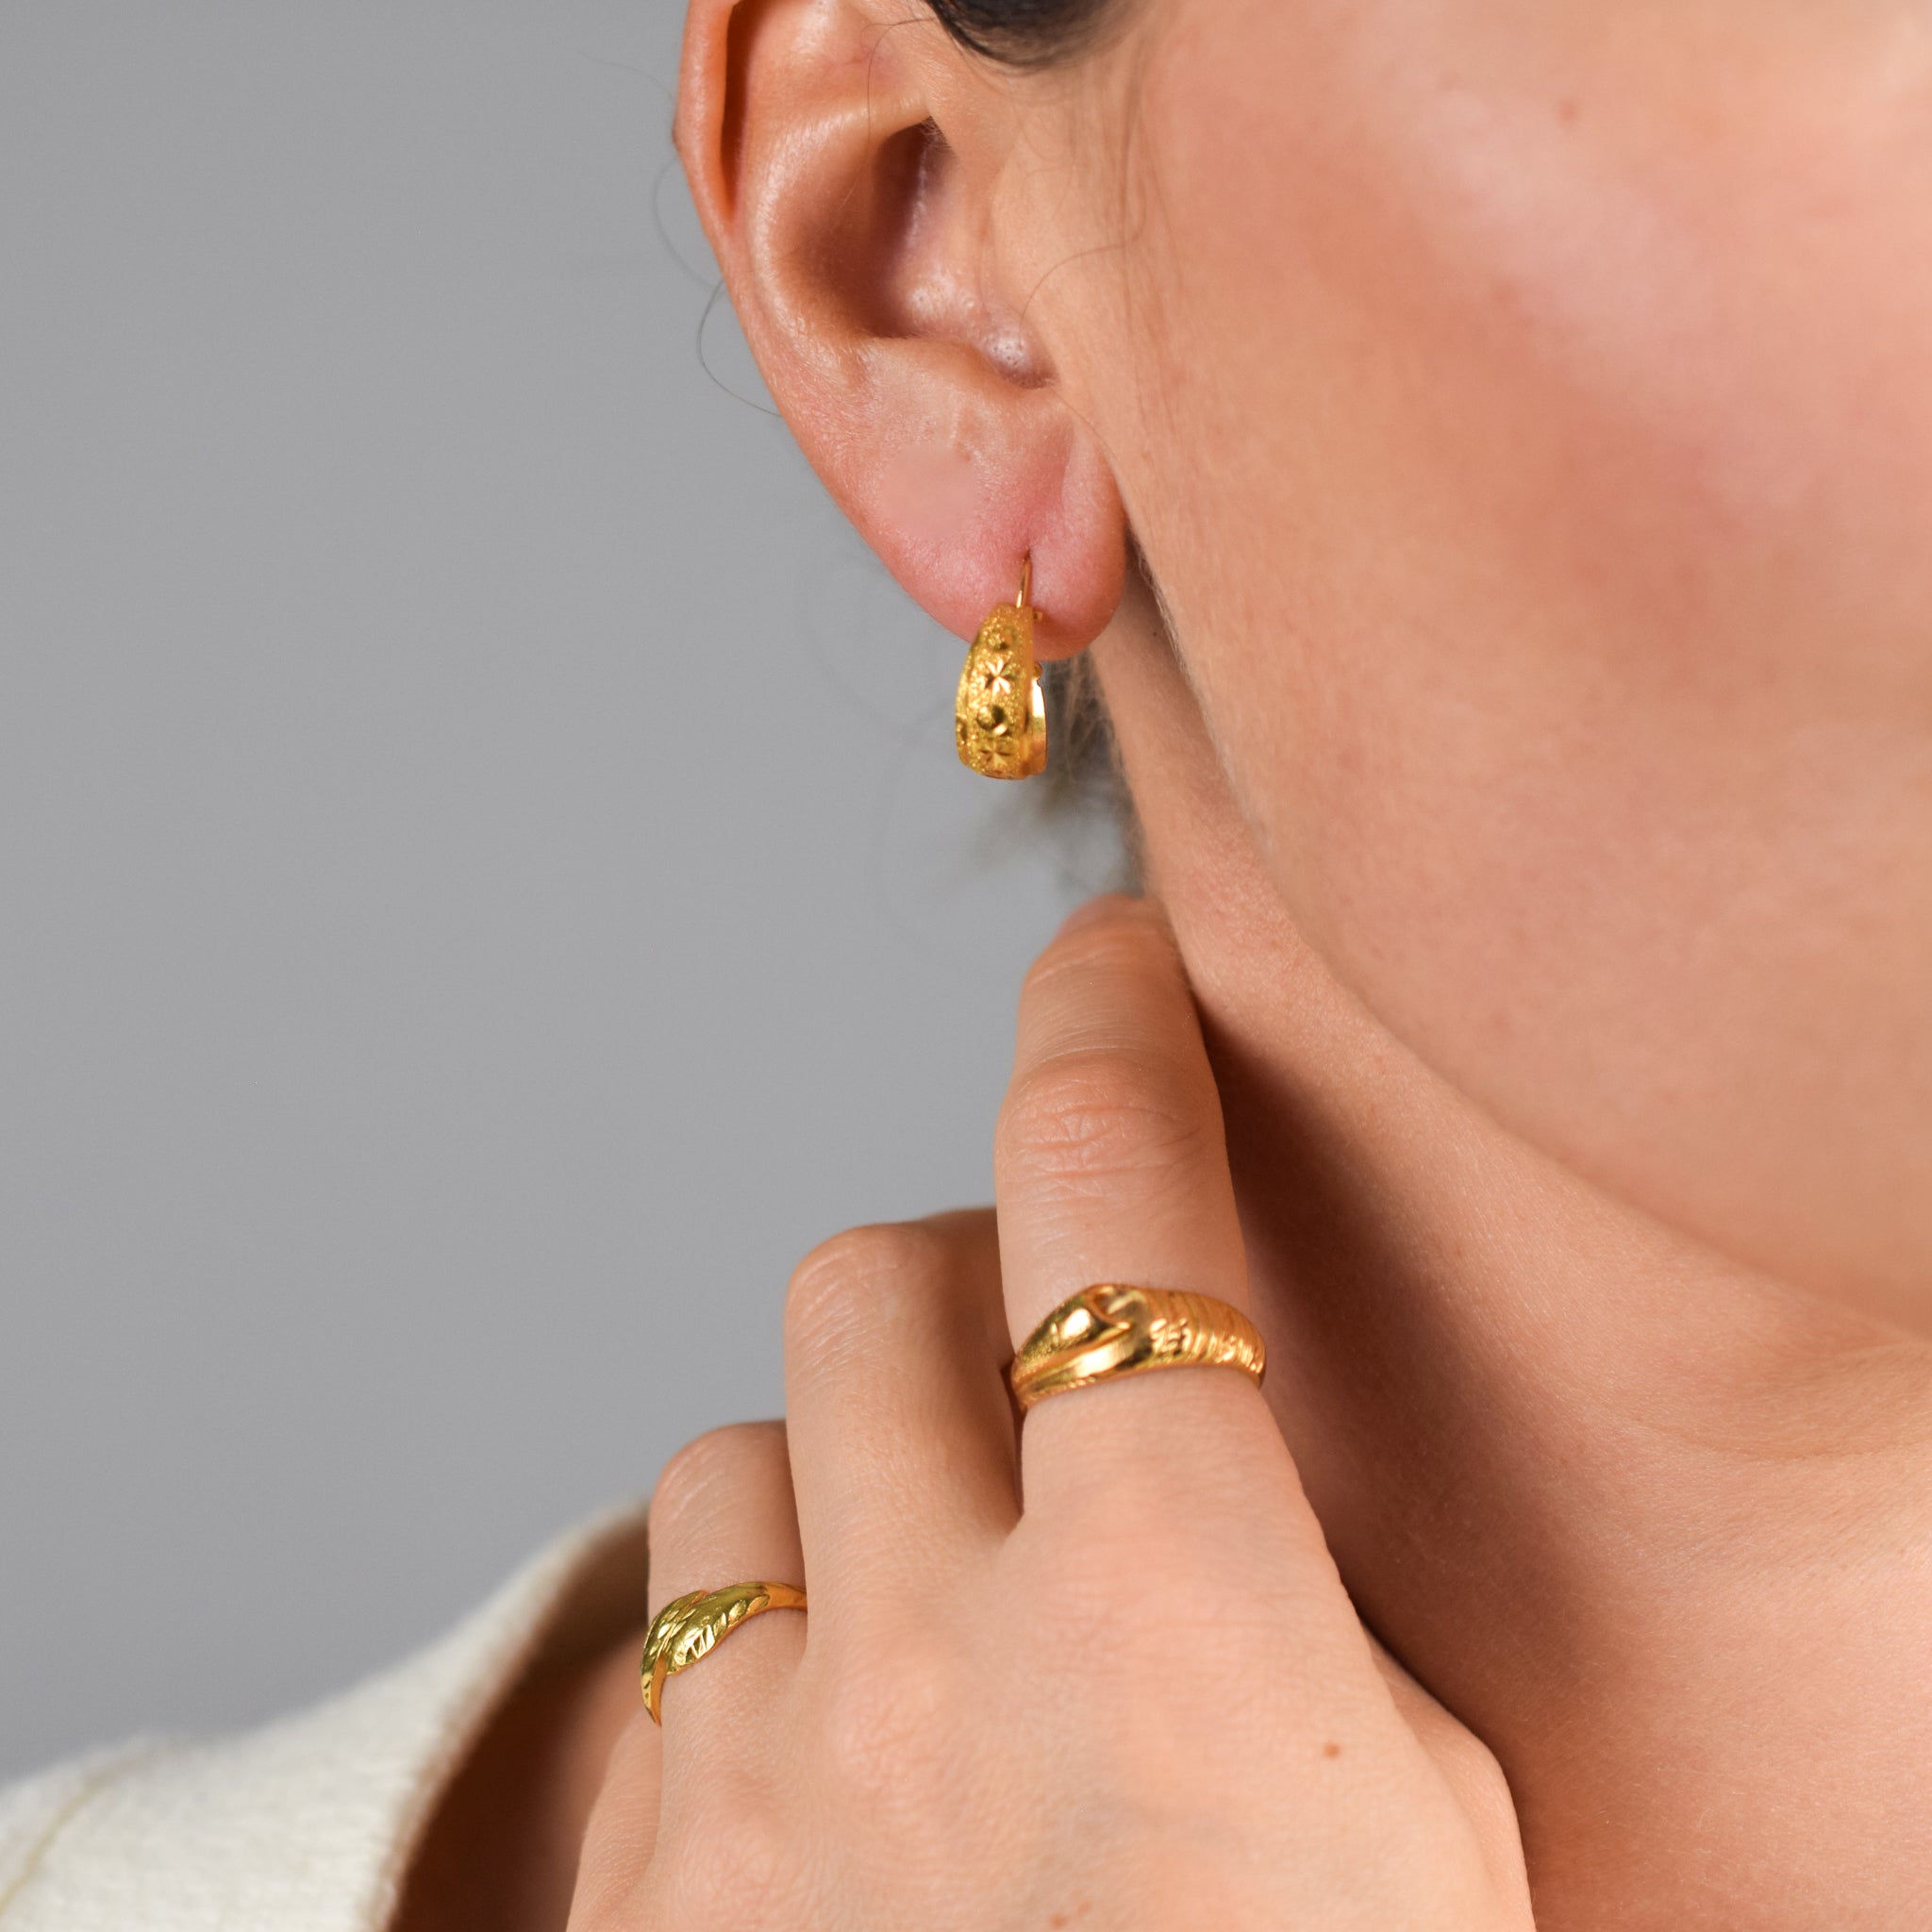 21k gold hoop earrings, folklor